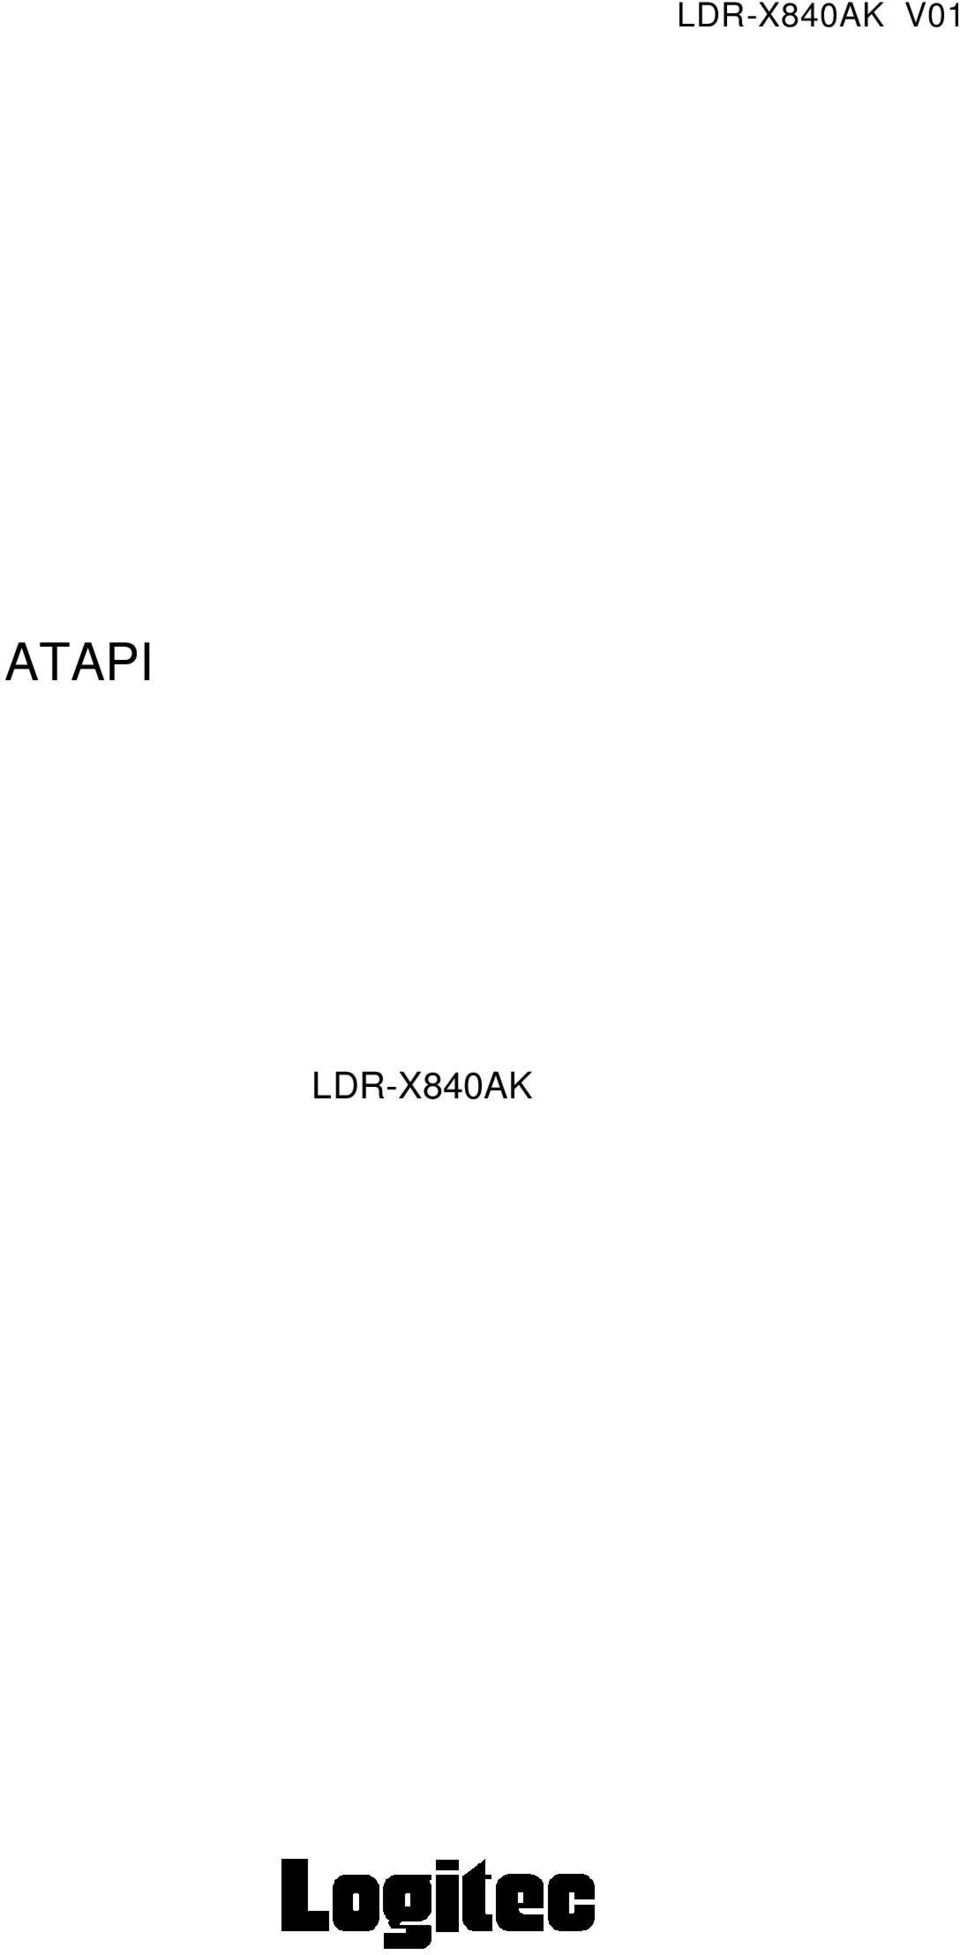 ATAPI(E-IDE) DVD